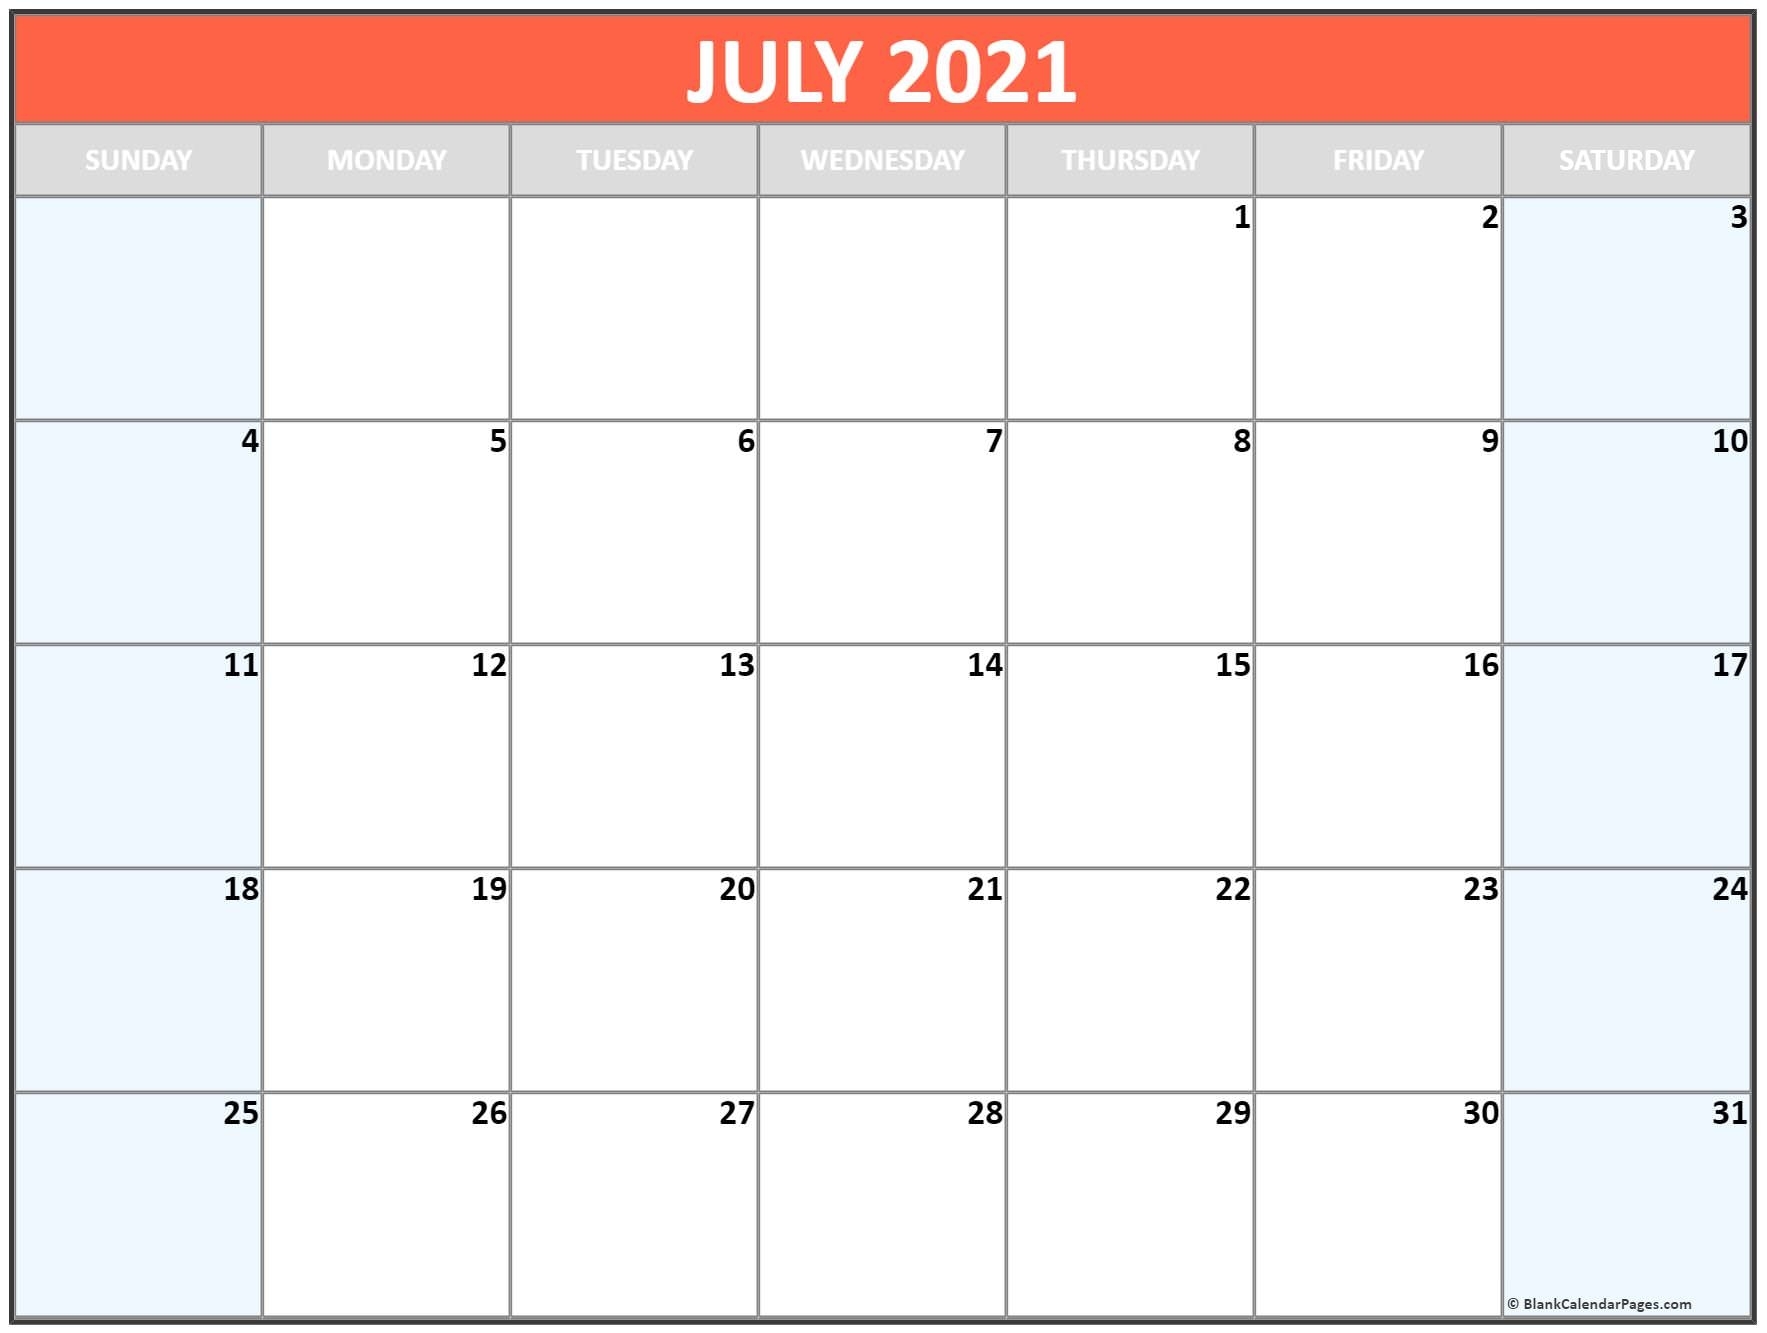 July 2021 Blank Calendar Templates. Online Calendar July 2021